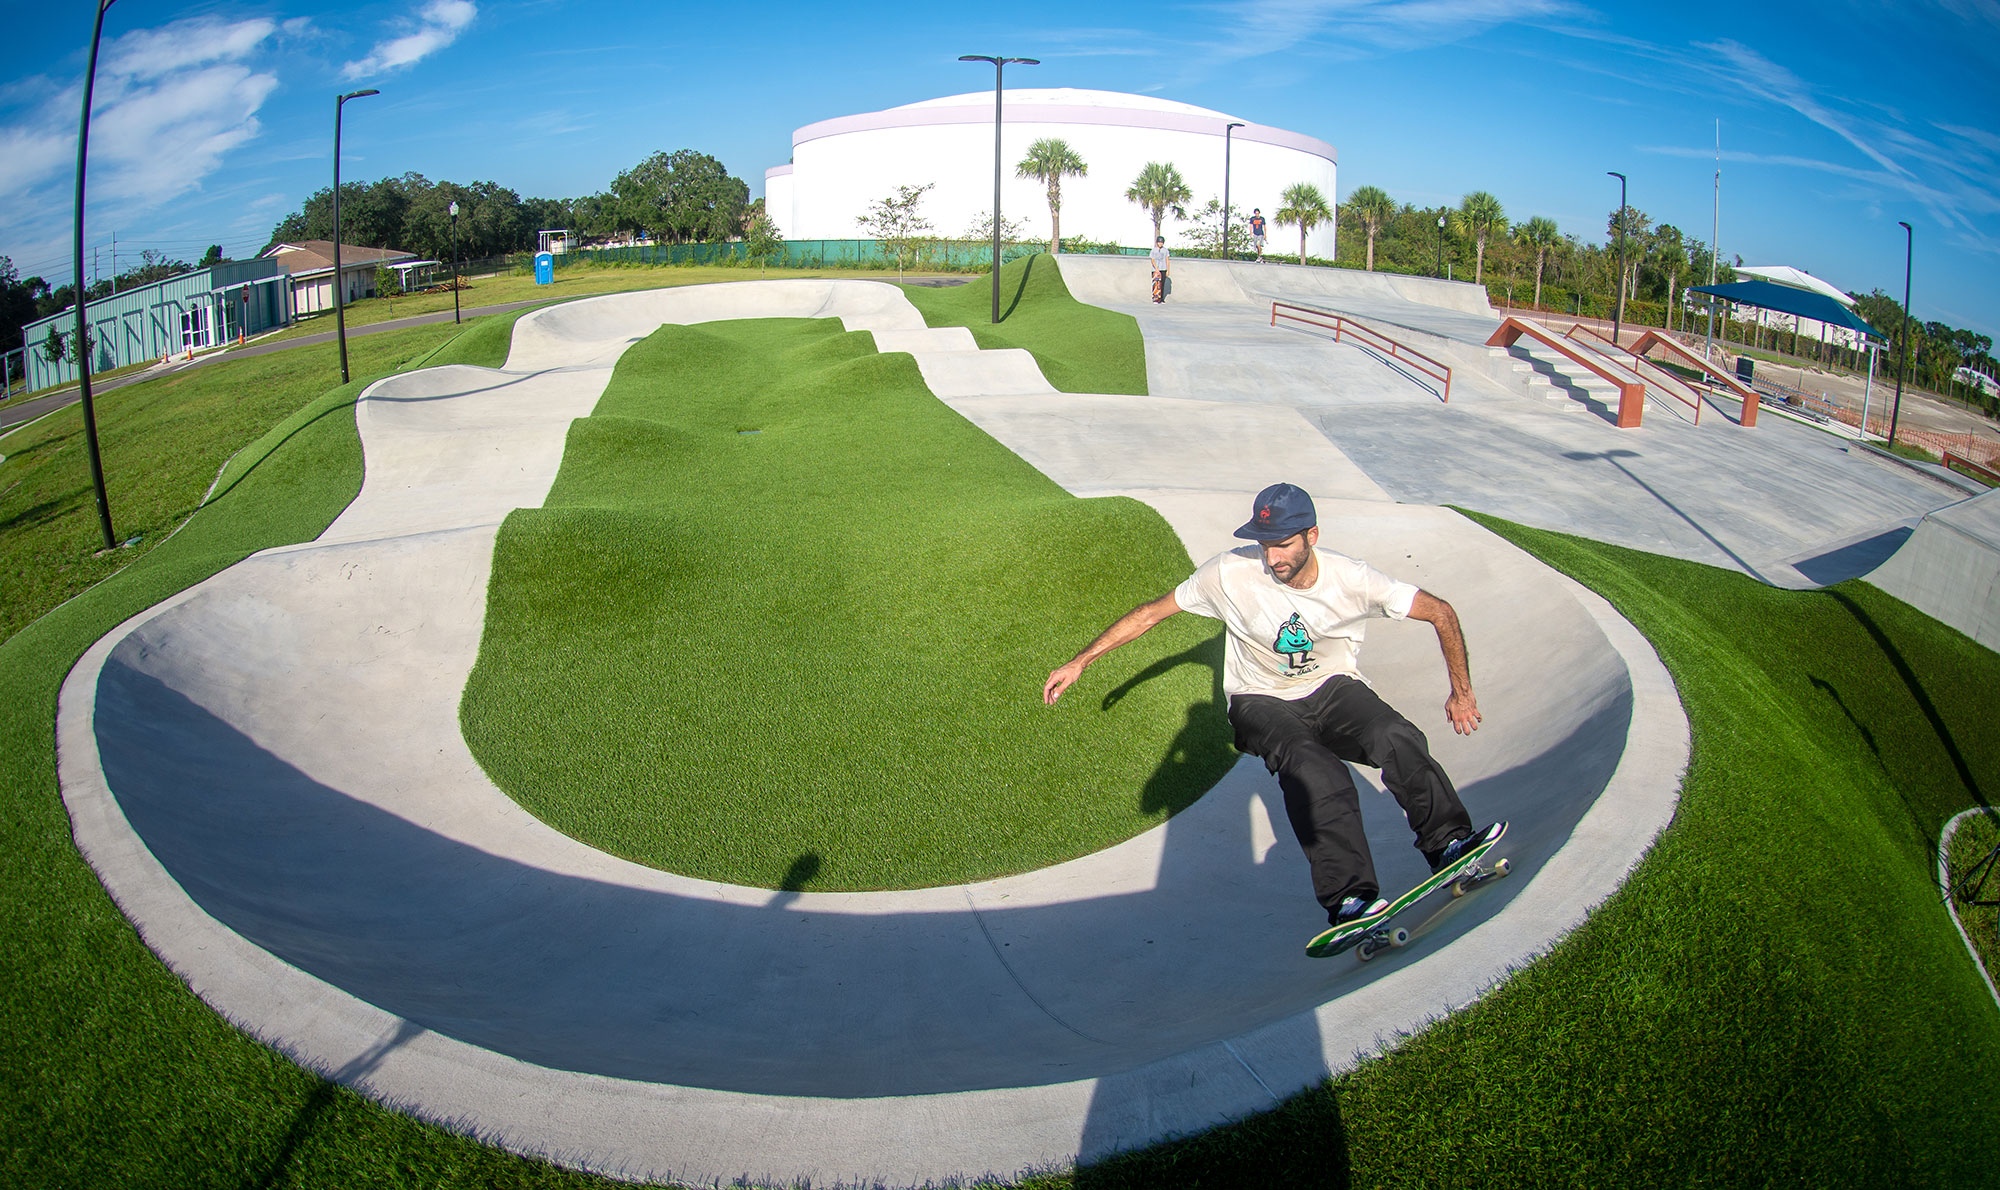 Carving a pump track at Carrollwood Skatepark, Tampa FL